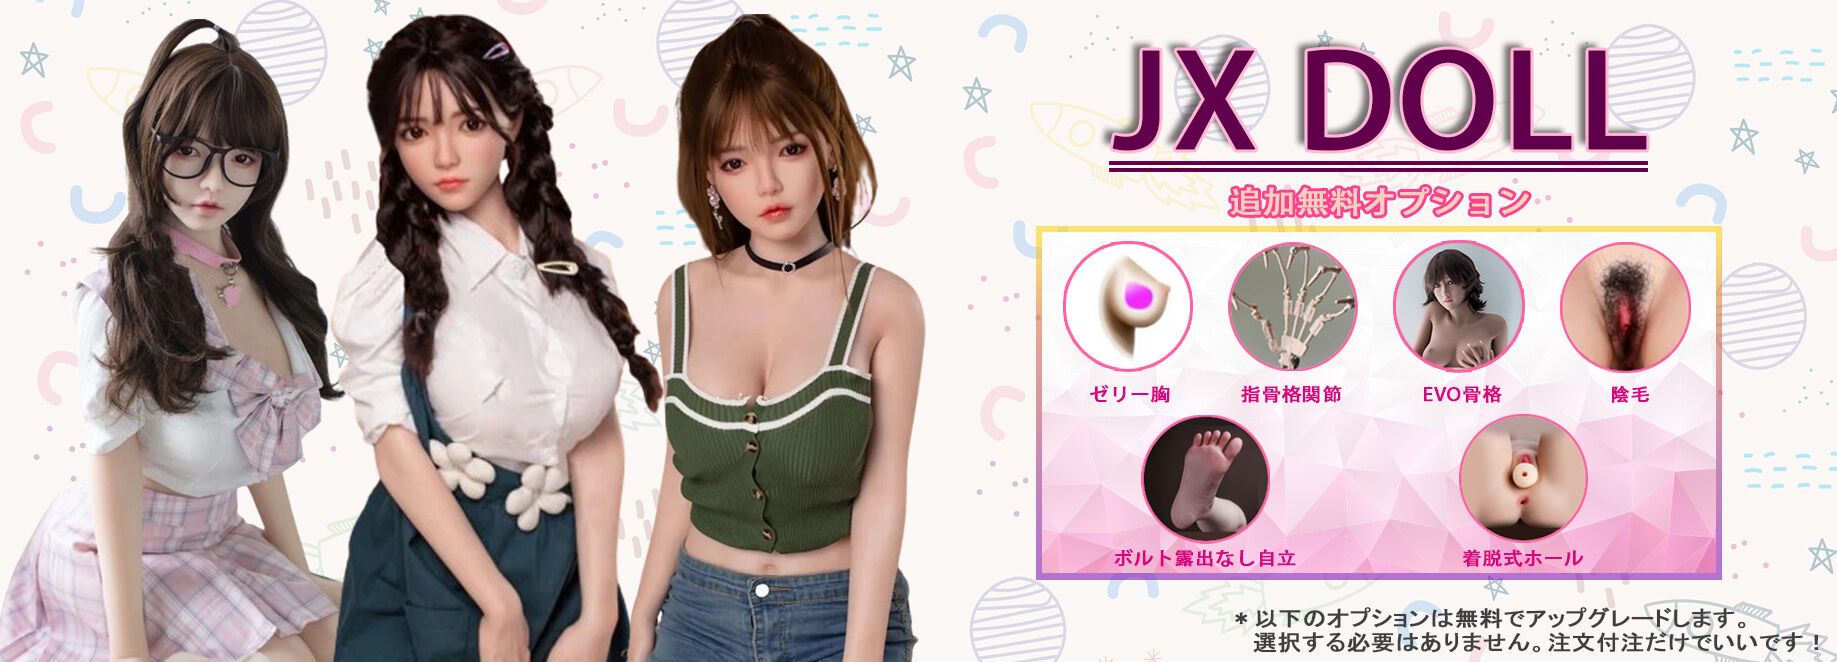 JXDoll大型オナホ通販日本高級ナオホールとオナホ人気商品一覧